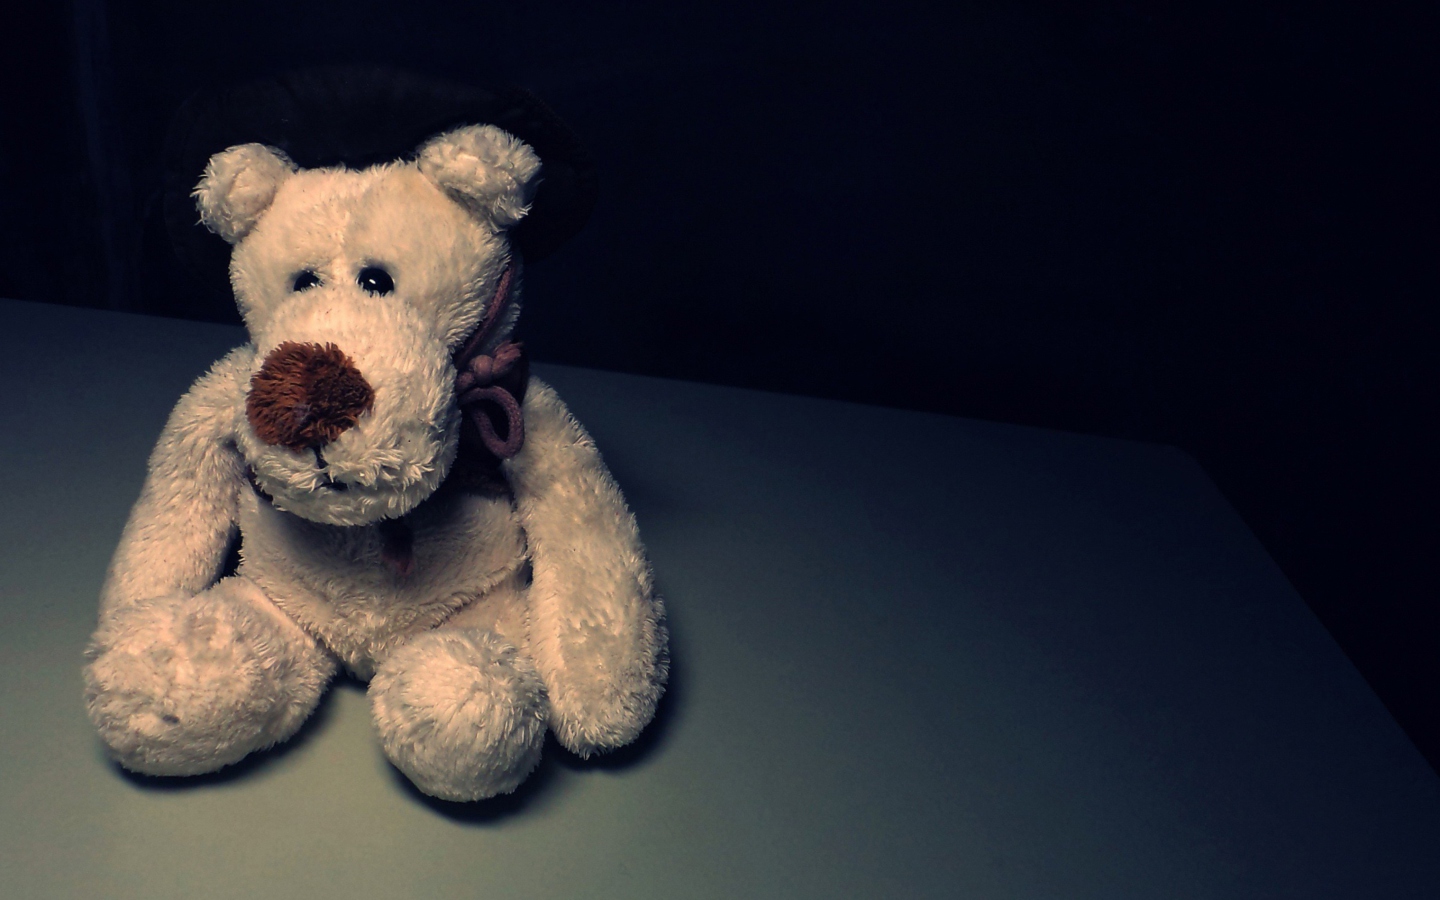 Sad Teddy Bear Sitting Alone wallpaper 1440x900